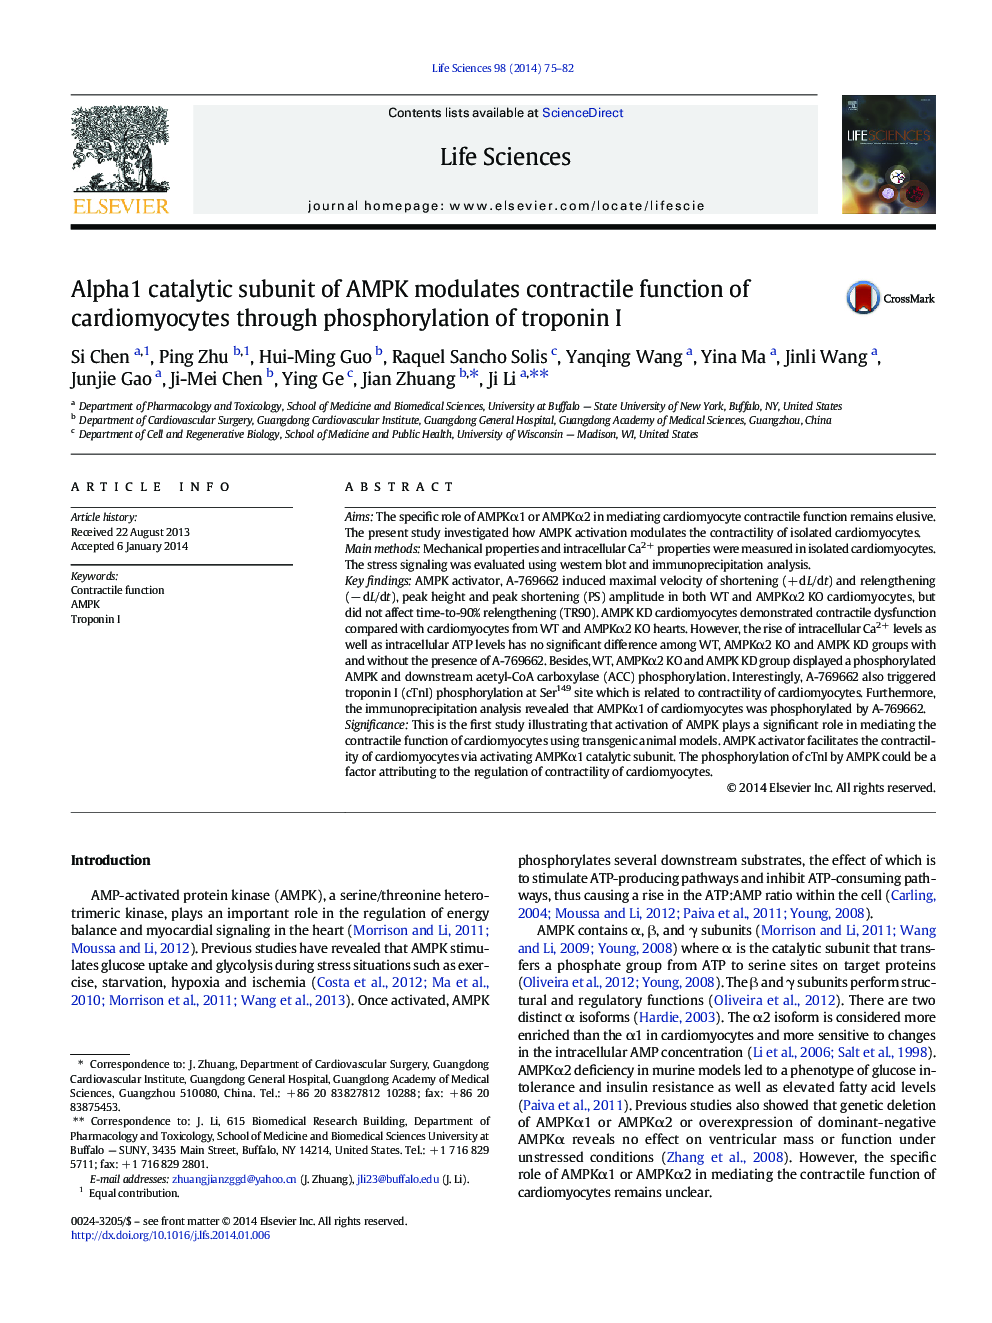 Alpha1 catalytic subunit of AMPK modulates contractile function of cardiomyocytes through phosphorylation of troponin I